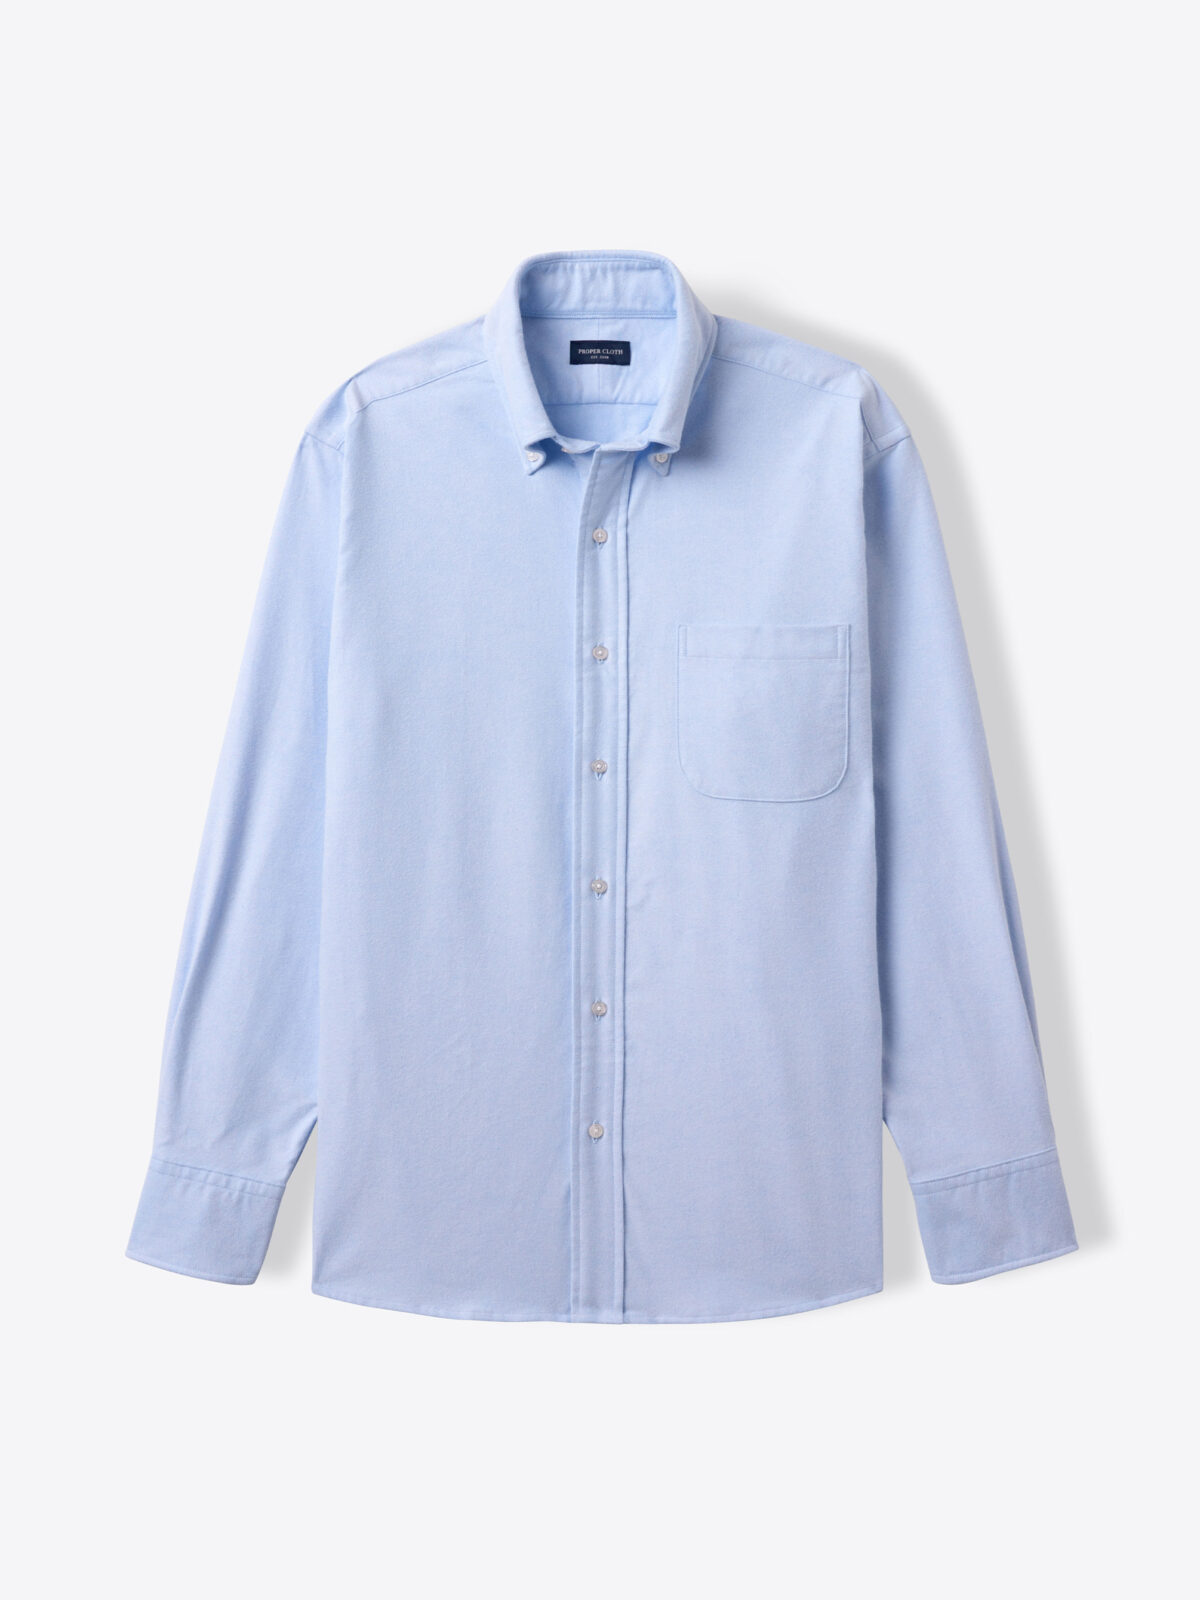 Light Blue Brushed Oxford Shirt by Proper Cloth